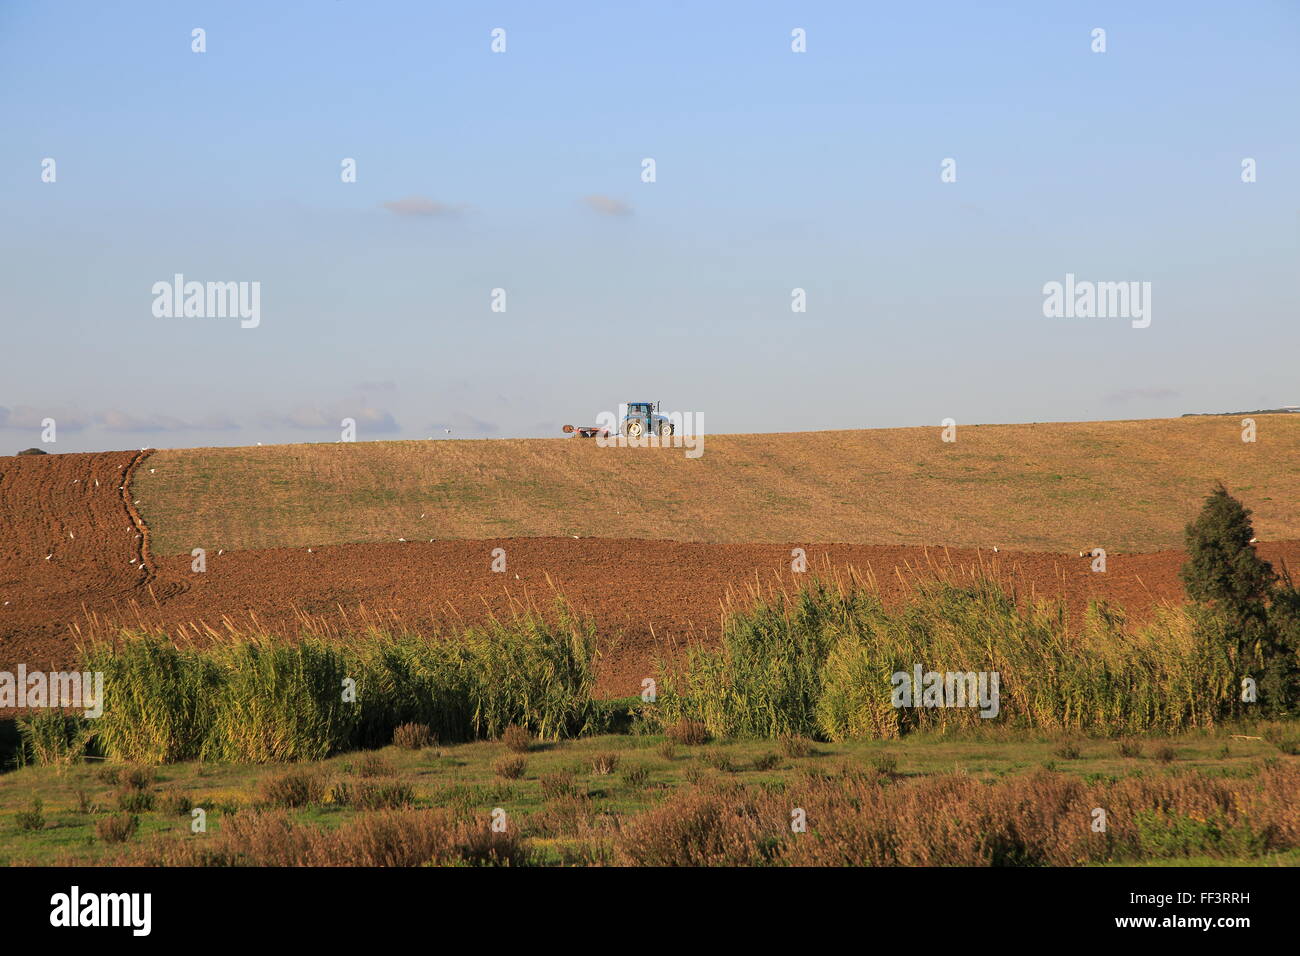 Tractor ploughing ridge along hillside in countryside near Vejer de la Fronterra, Cadiz Province, Spain Stock Photo